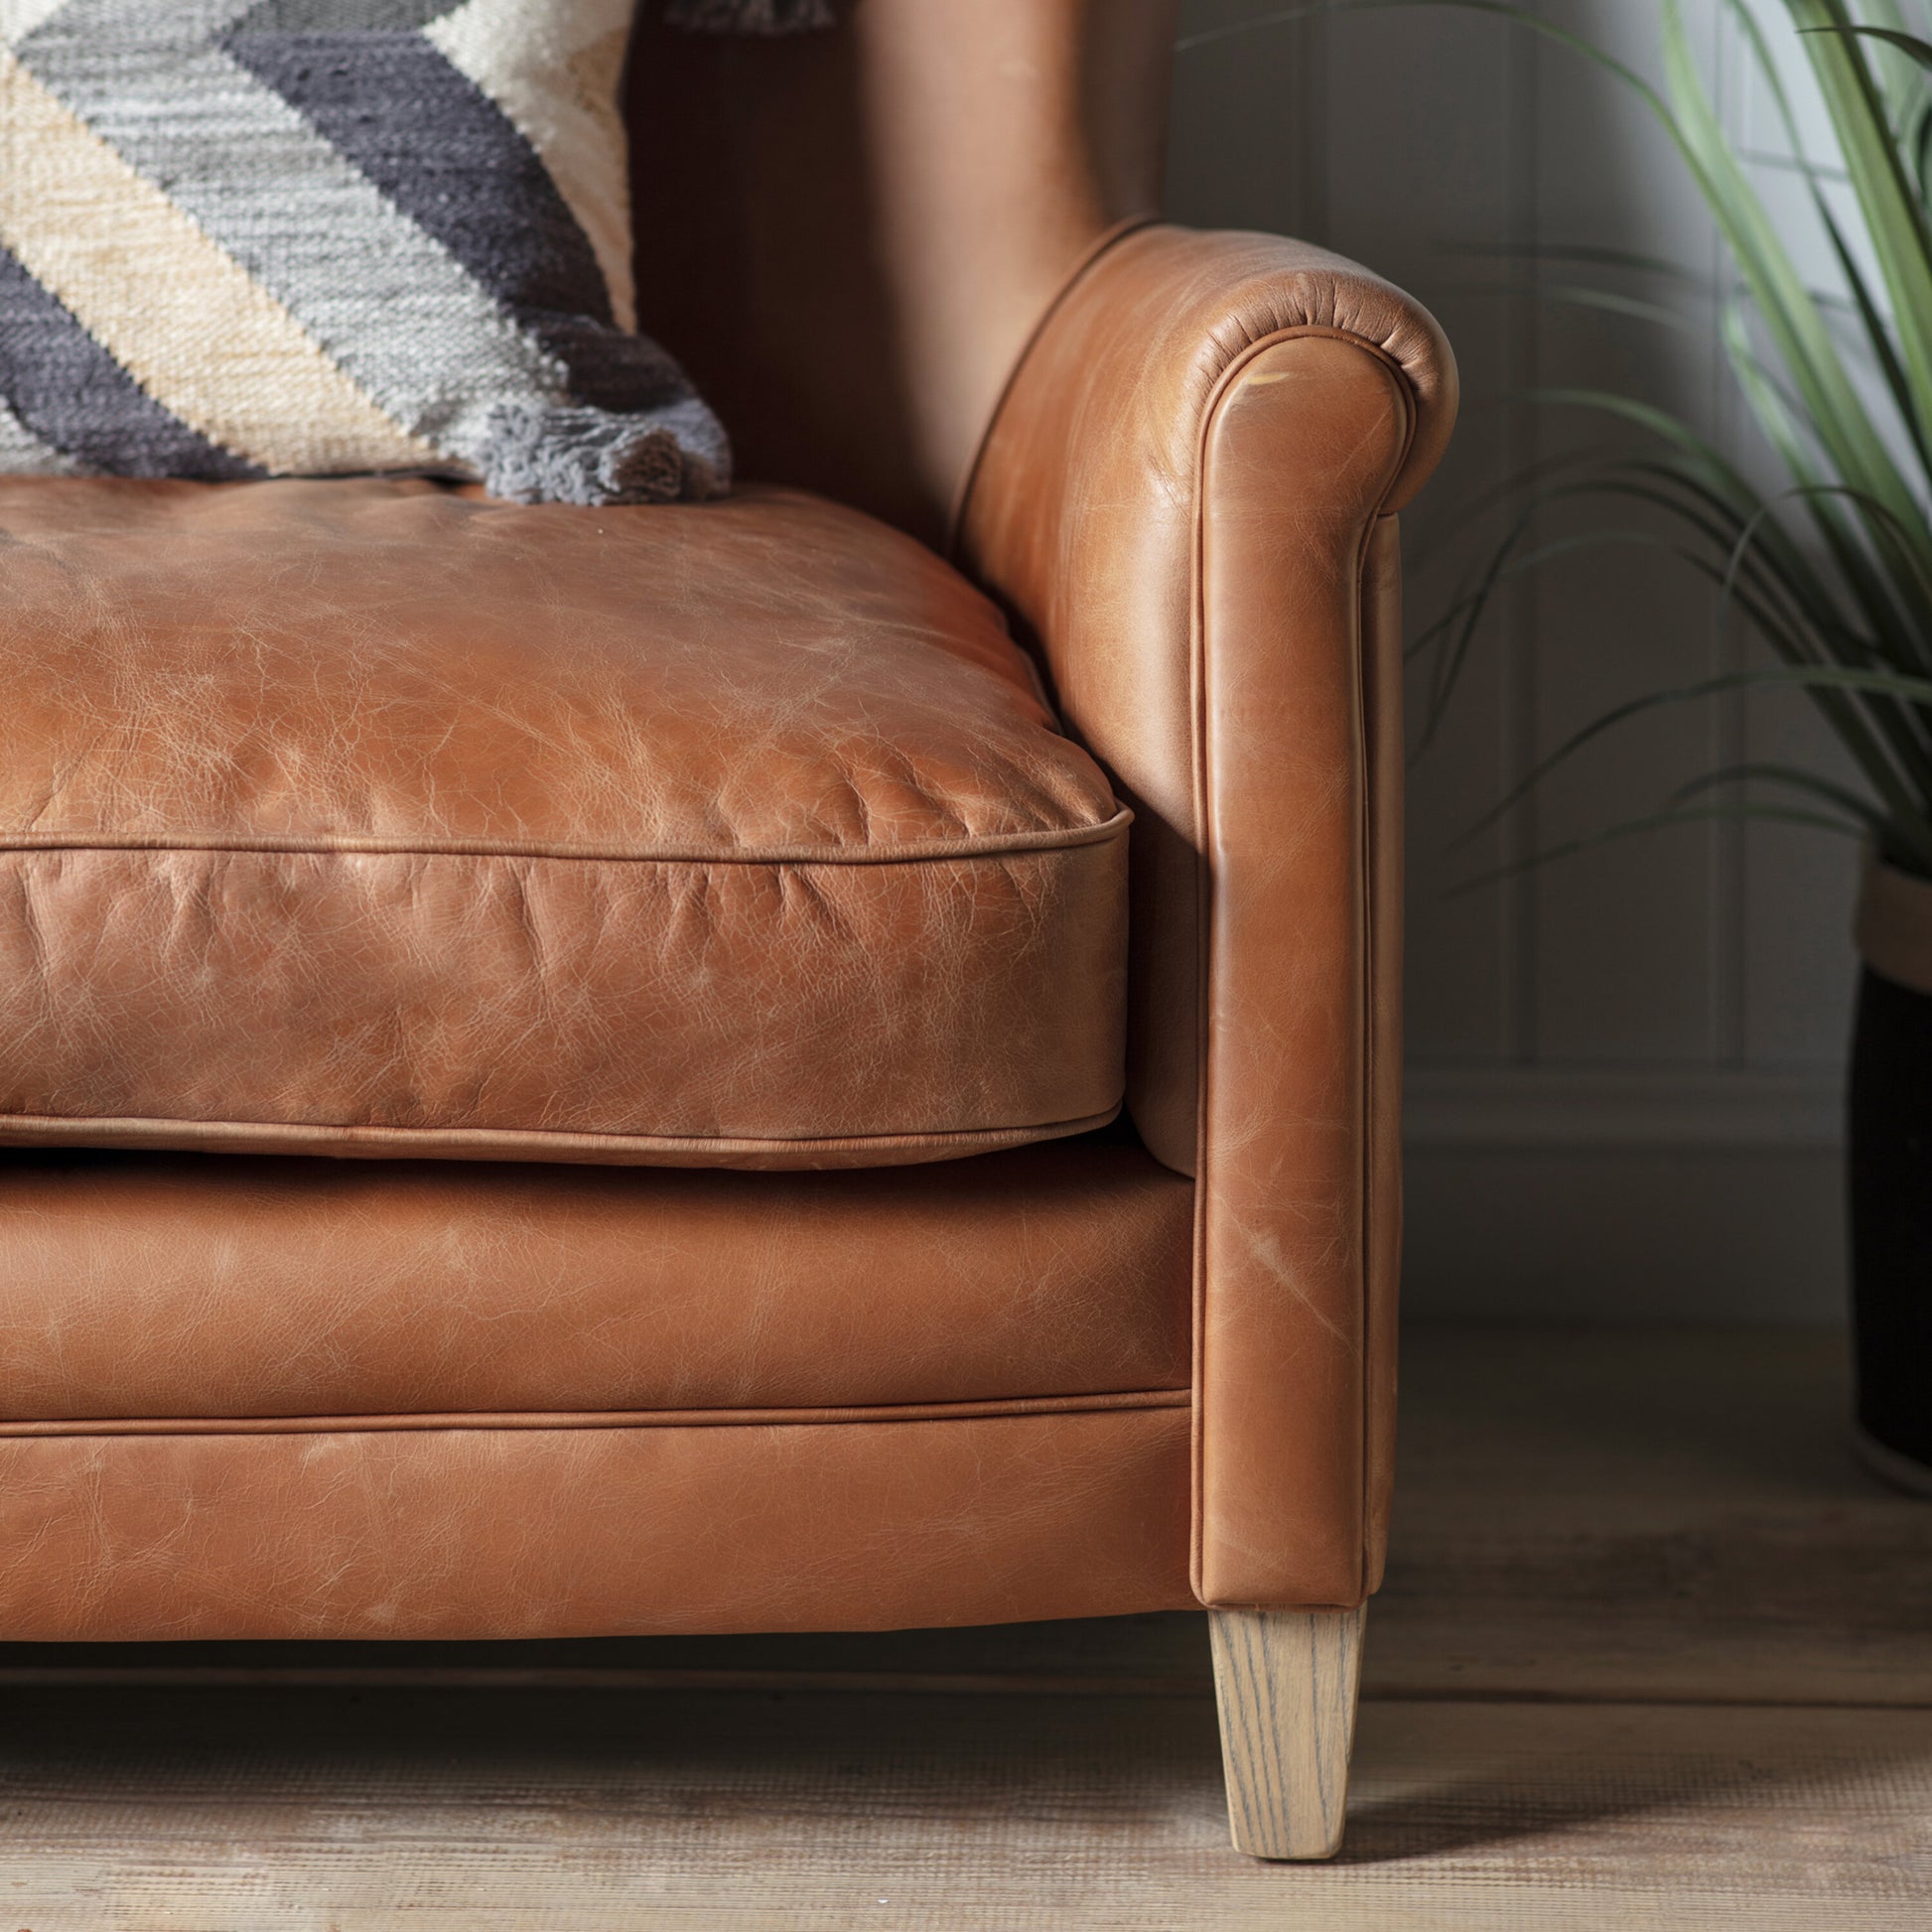 Usher Sofa | Vintage Brown Leather 